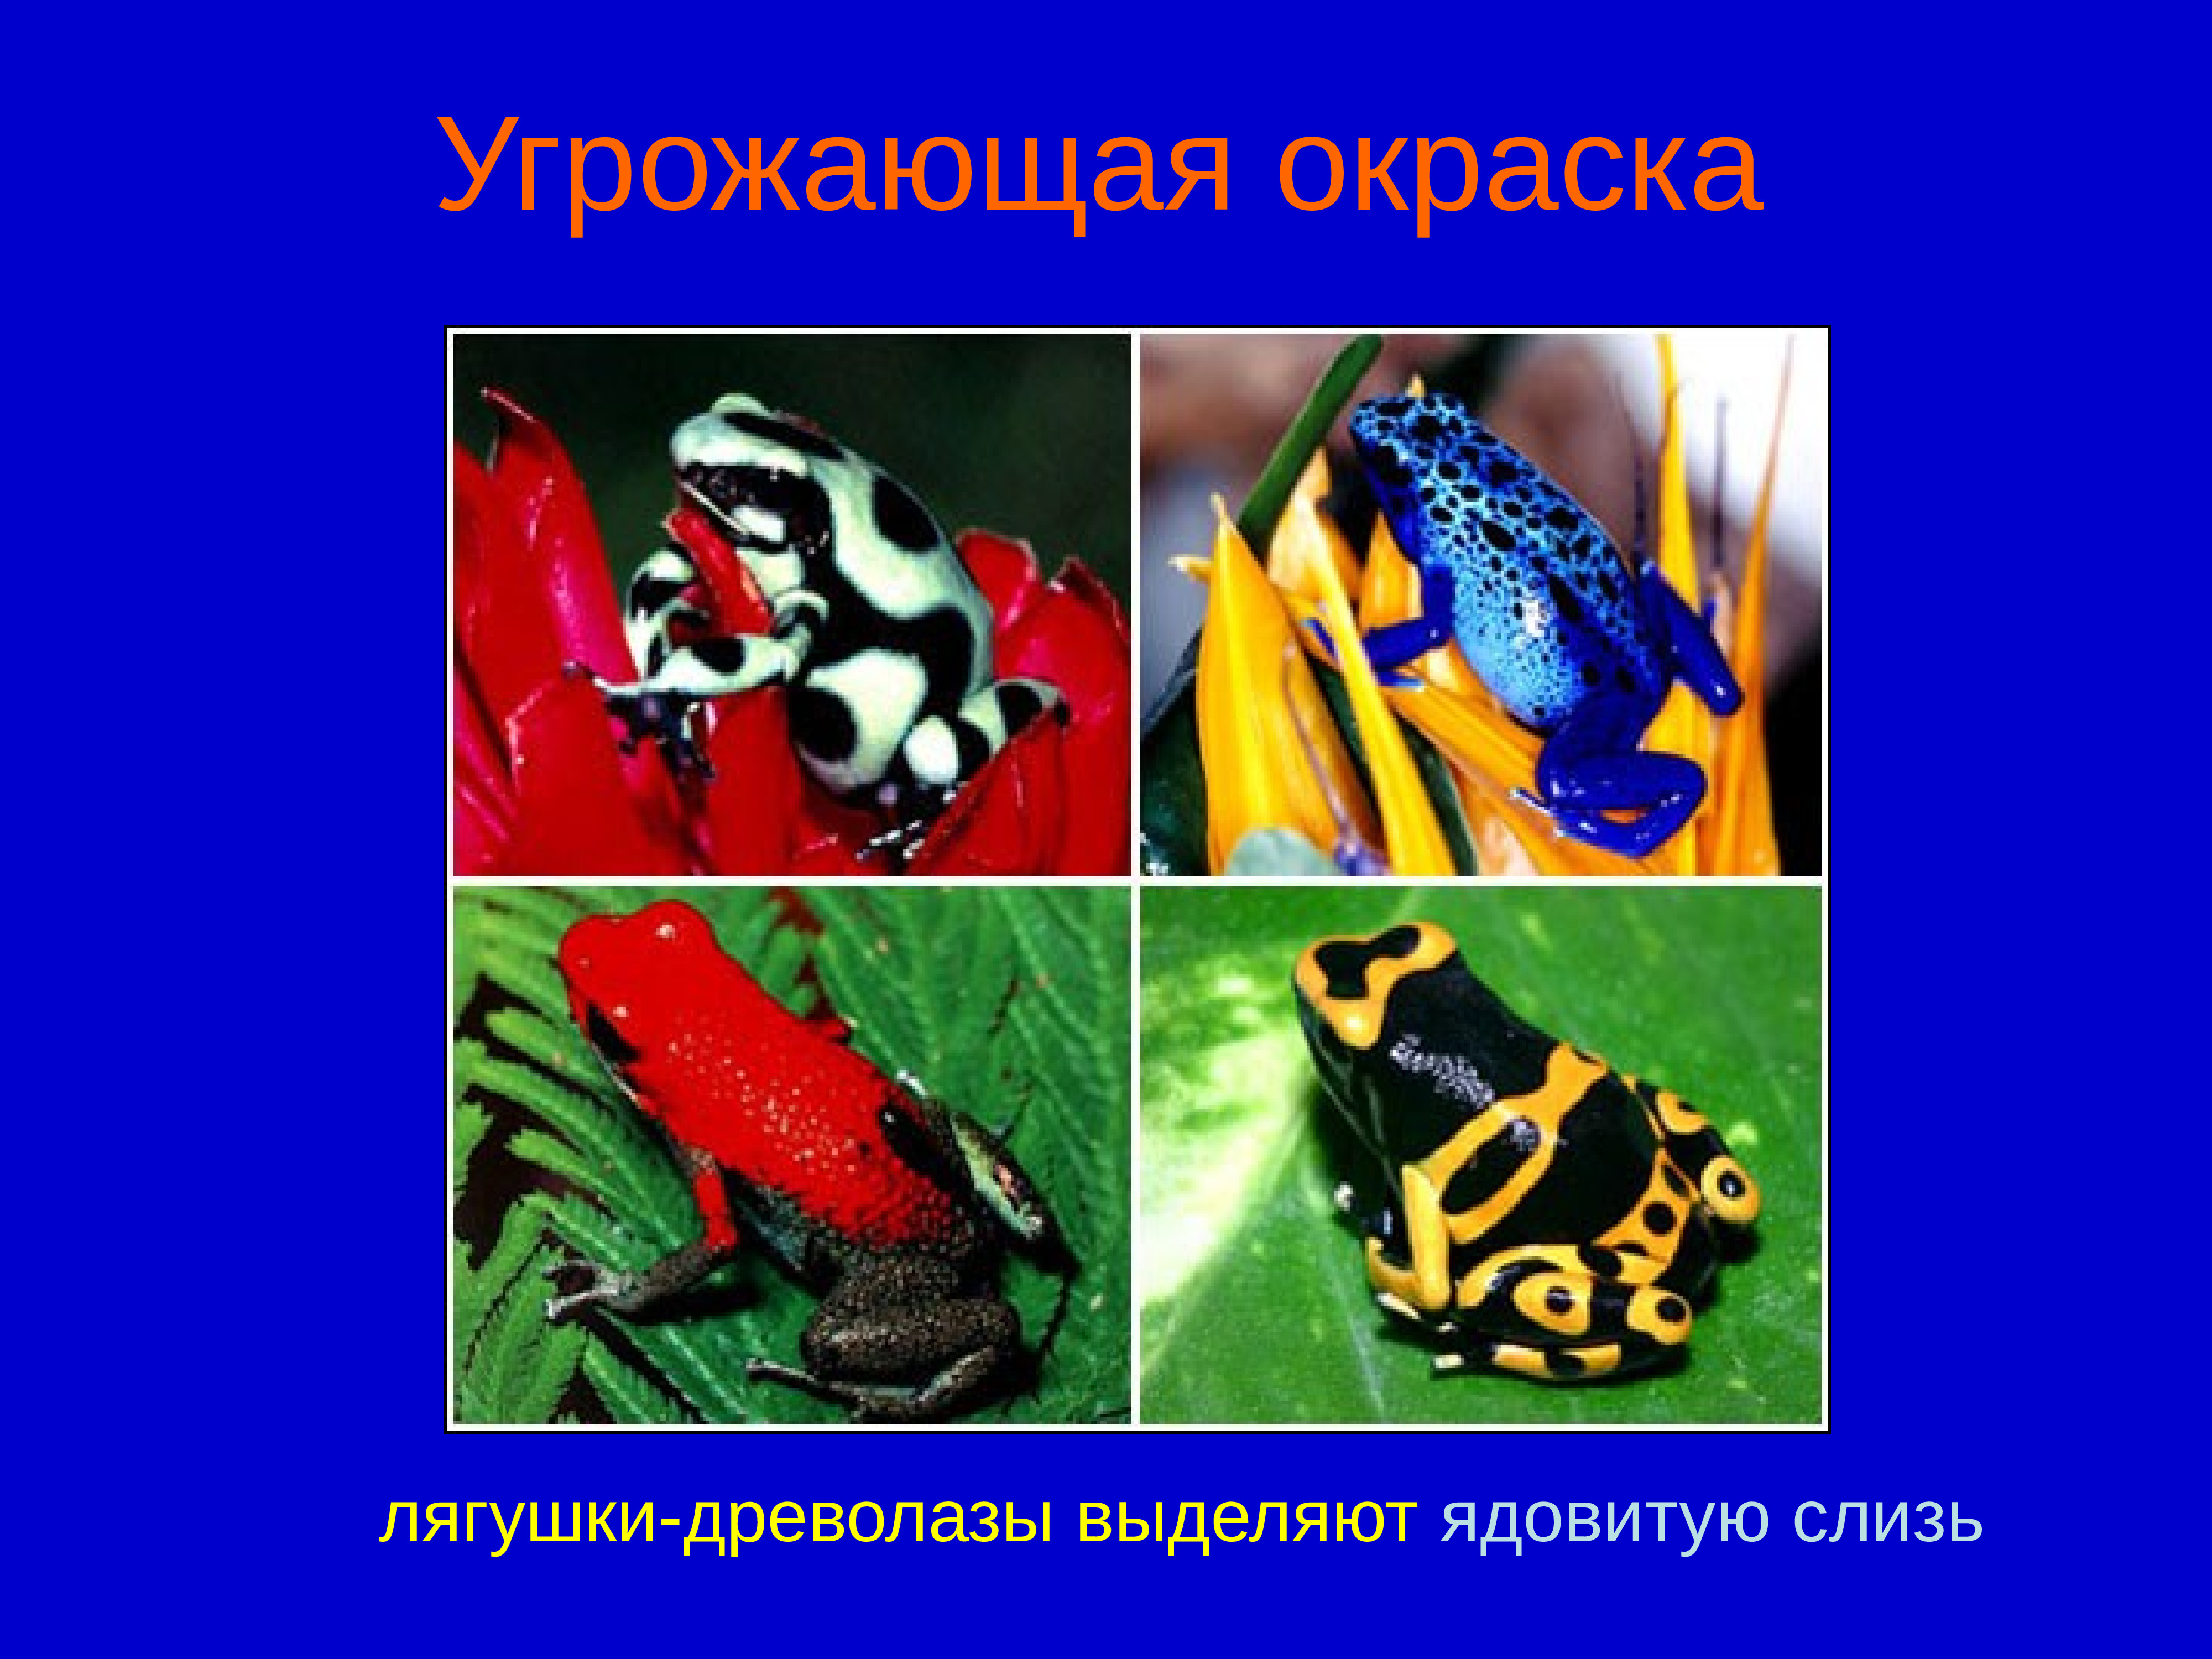 Предупреждающая окраска характеристика. Предостерегающая окраска лягушка древолаз. Предупреждающая окраска. Угрожающая окраска. Угрожающая окраска животных и растений.